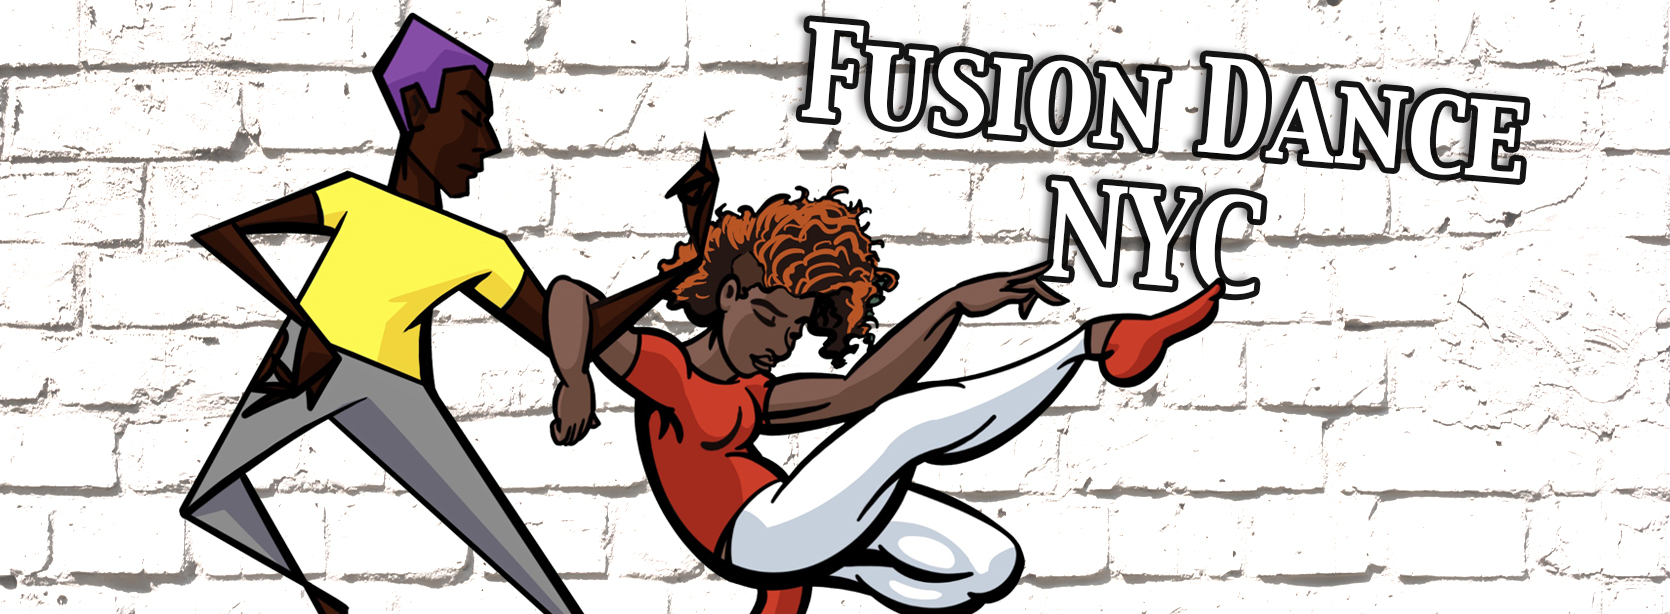 Tag: <span>fusion dance nyc</span>